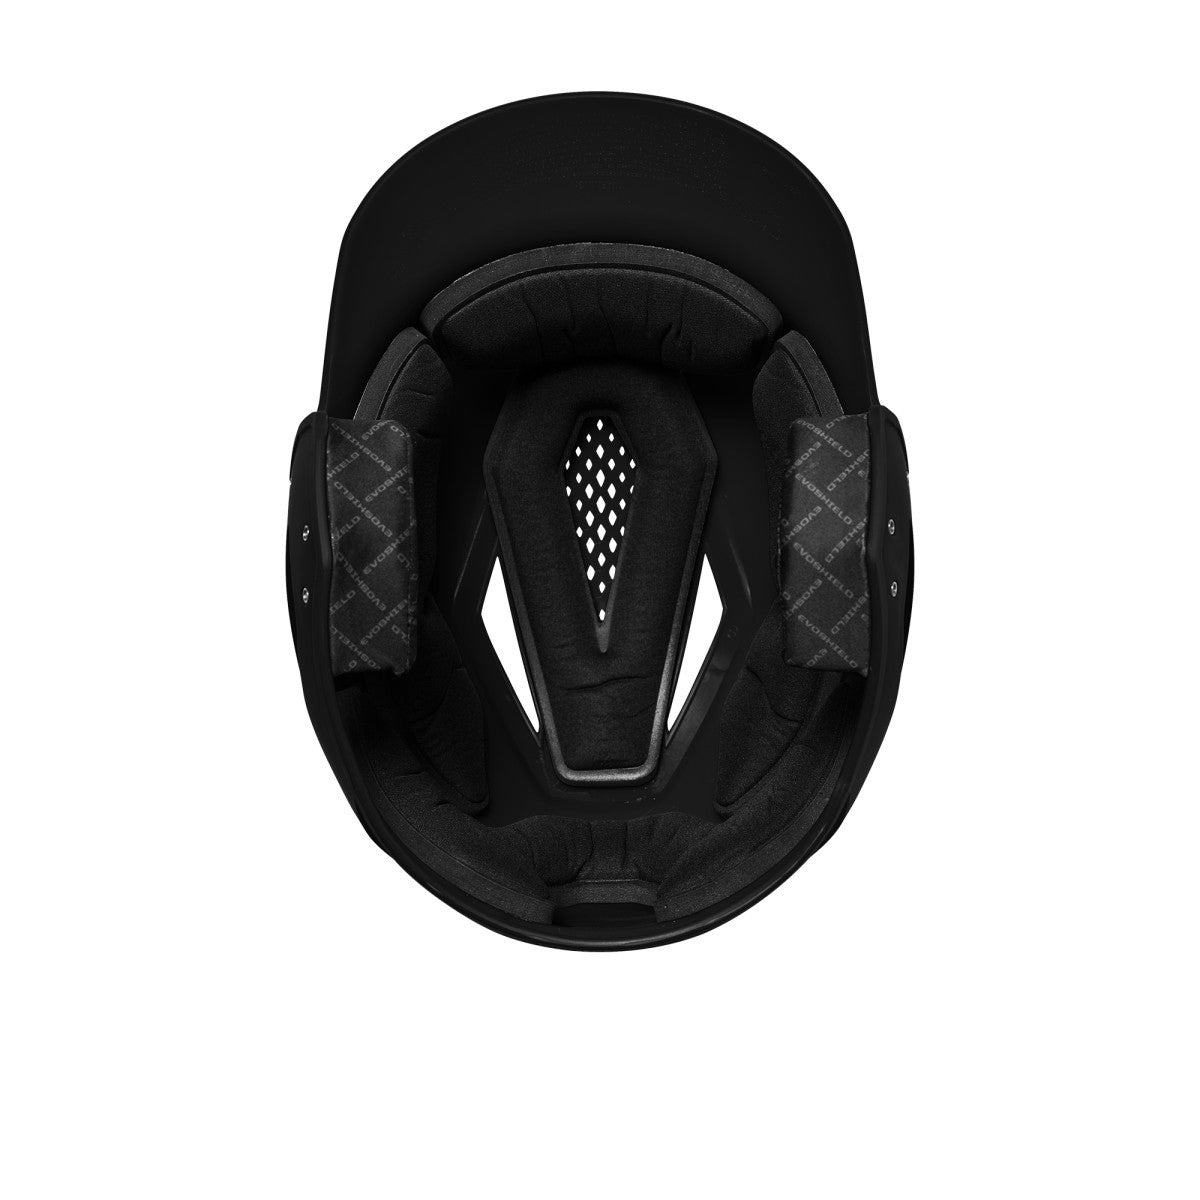 EvoShield XVT Batting Helmet - Charcoal Matte Finish (WTV7115CH)